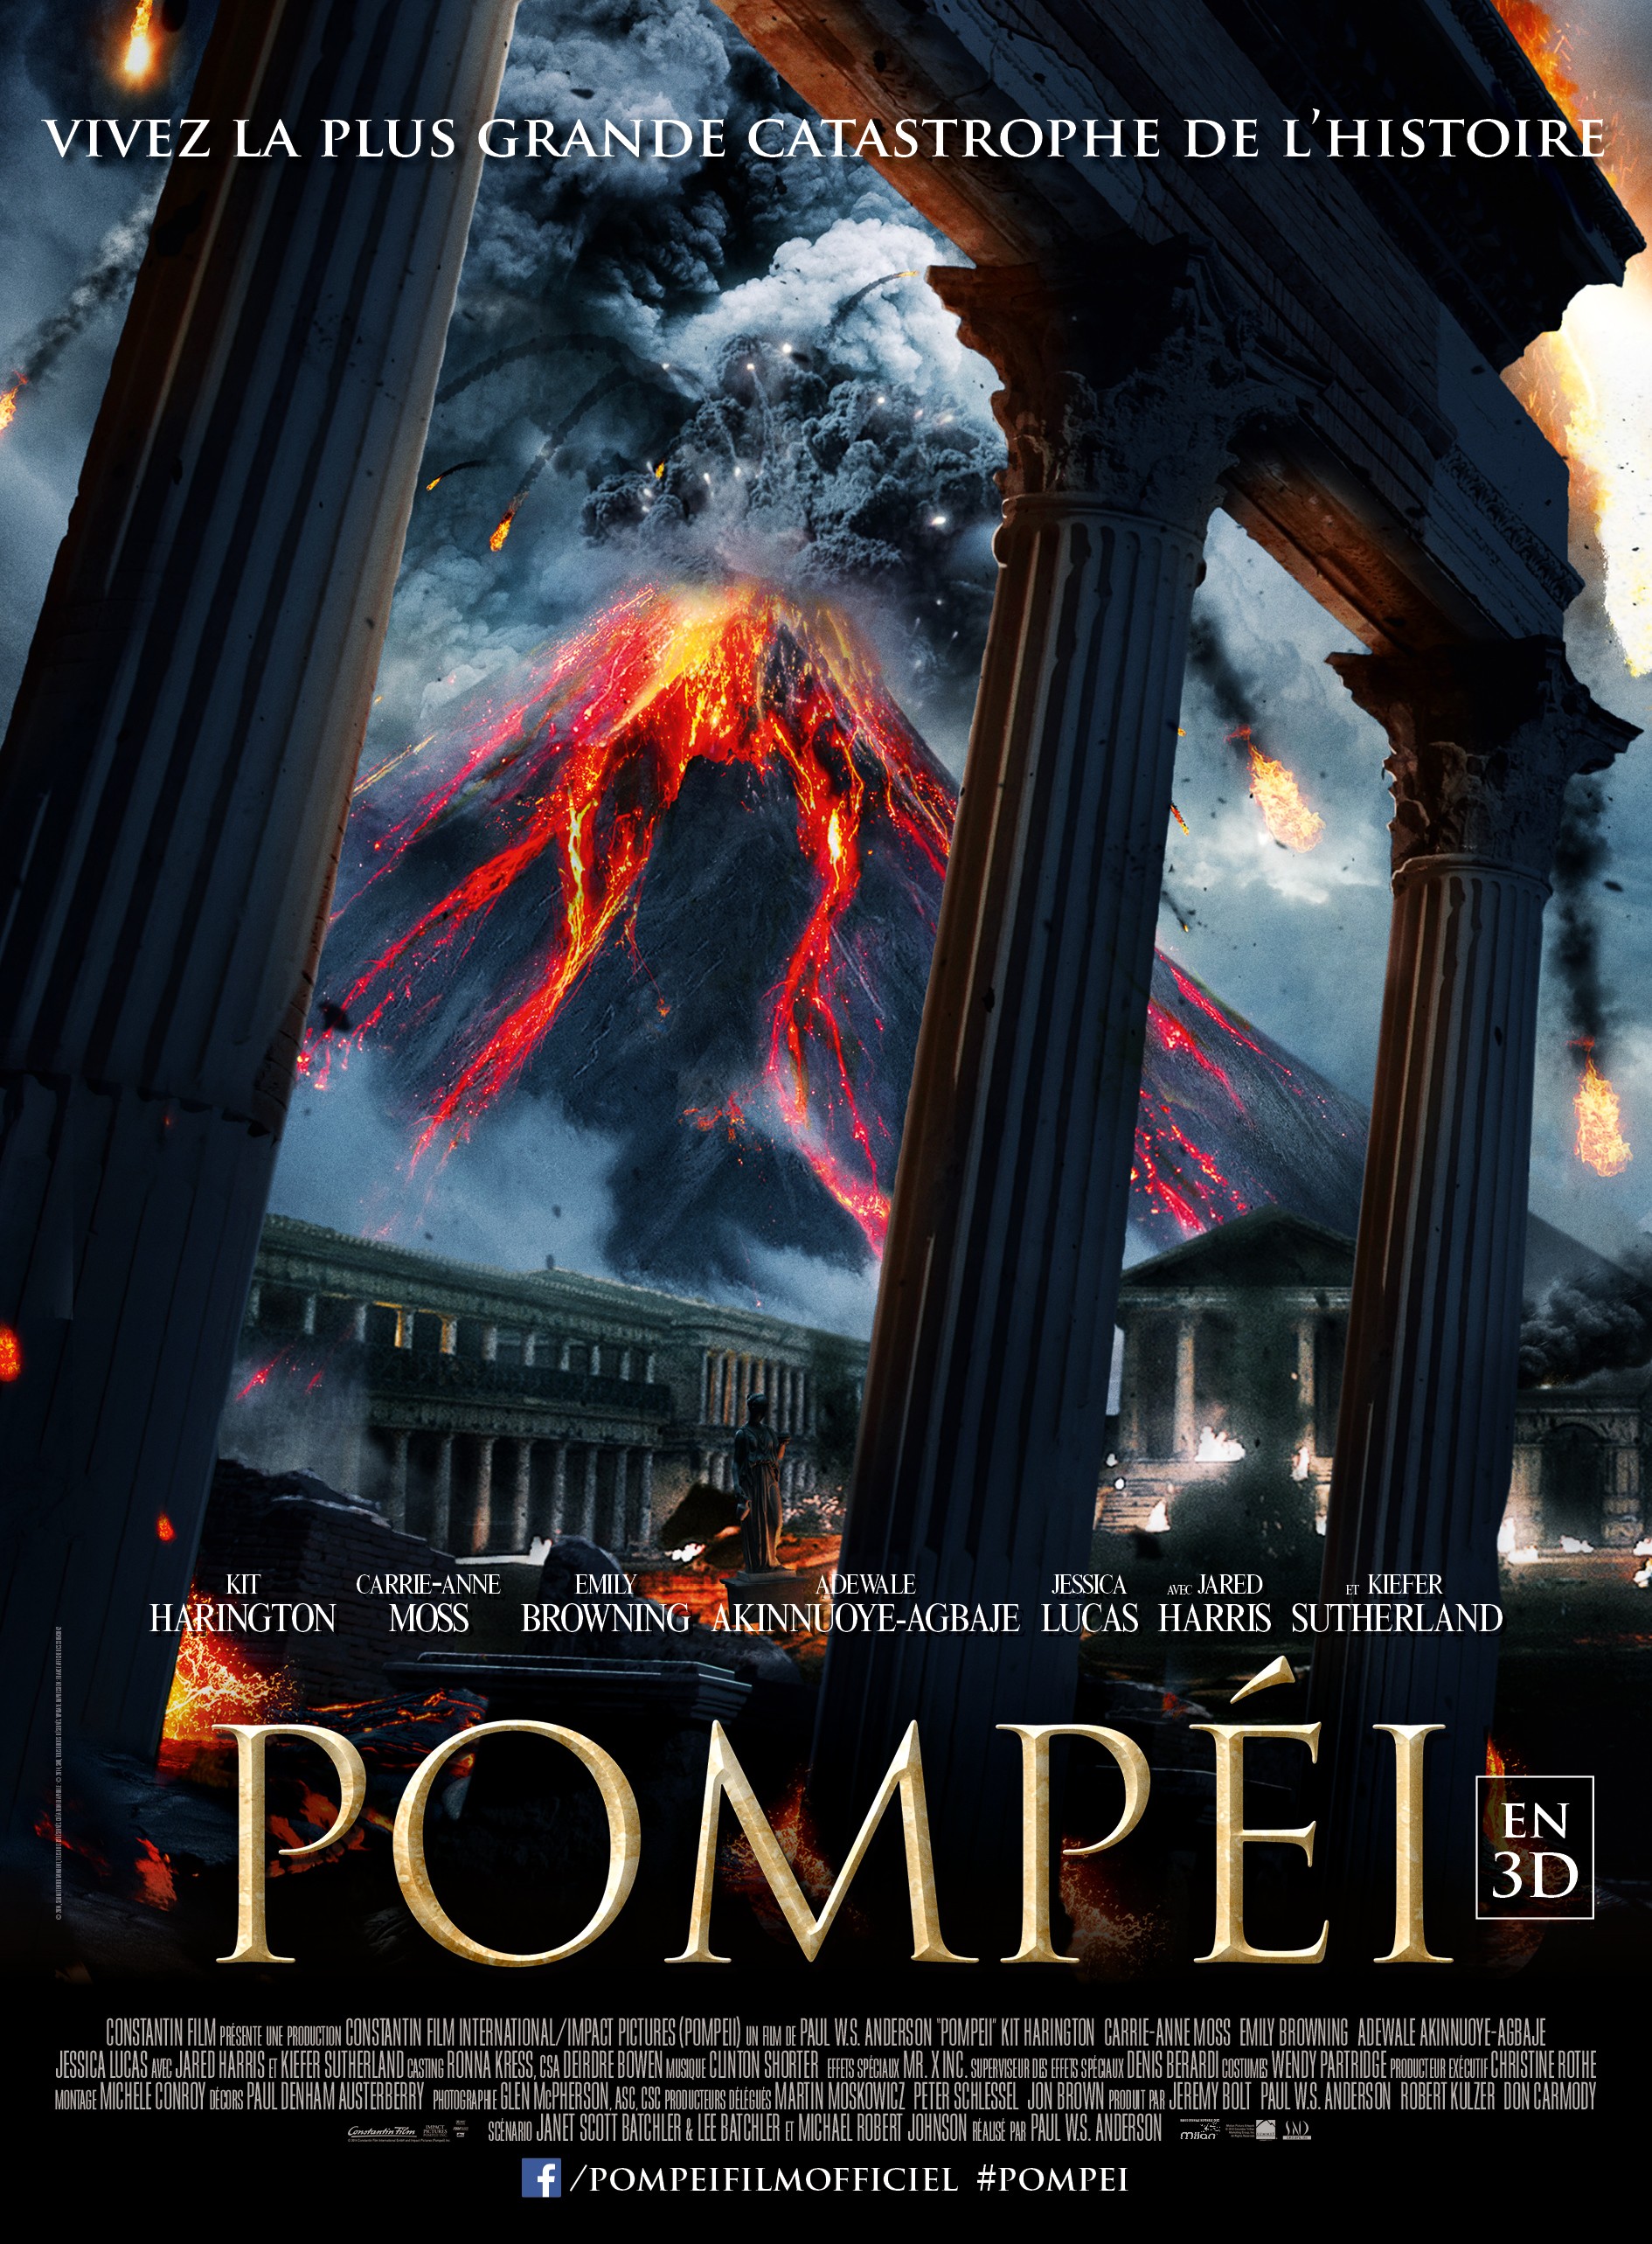 Pompeii-Official Poster Banner PROMO POSTER international XXLG-22JANEIRO2014